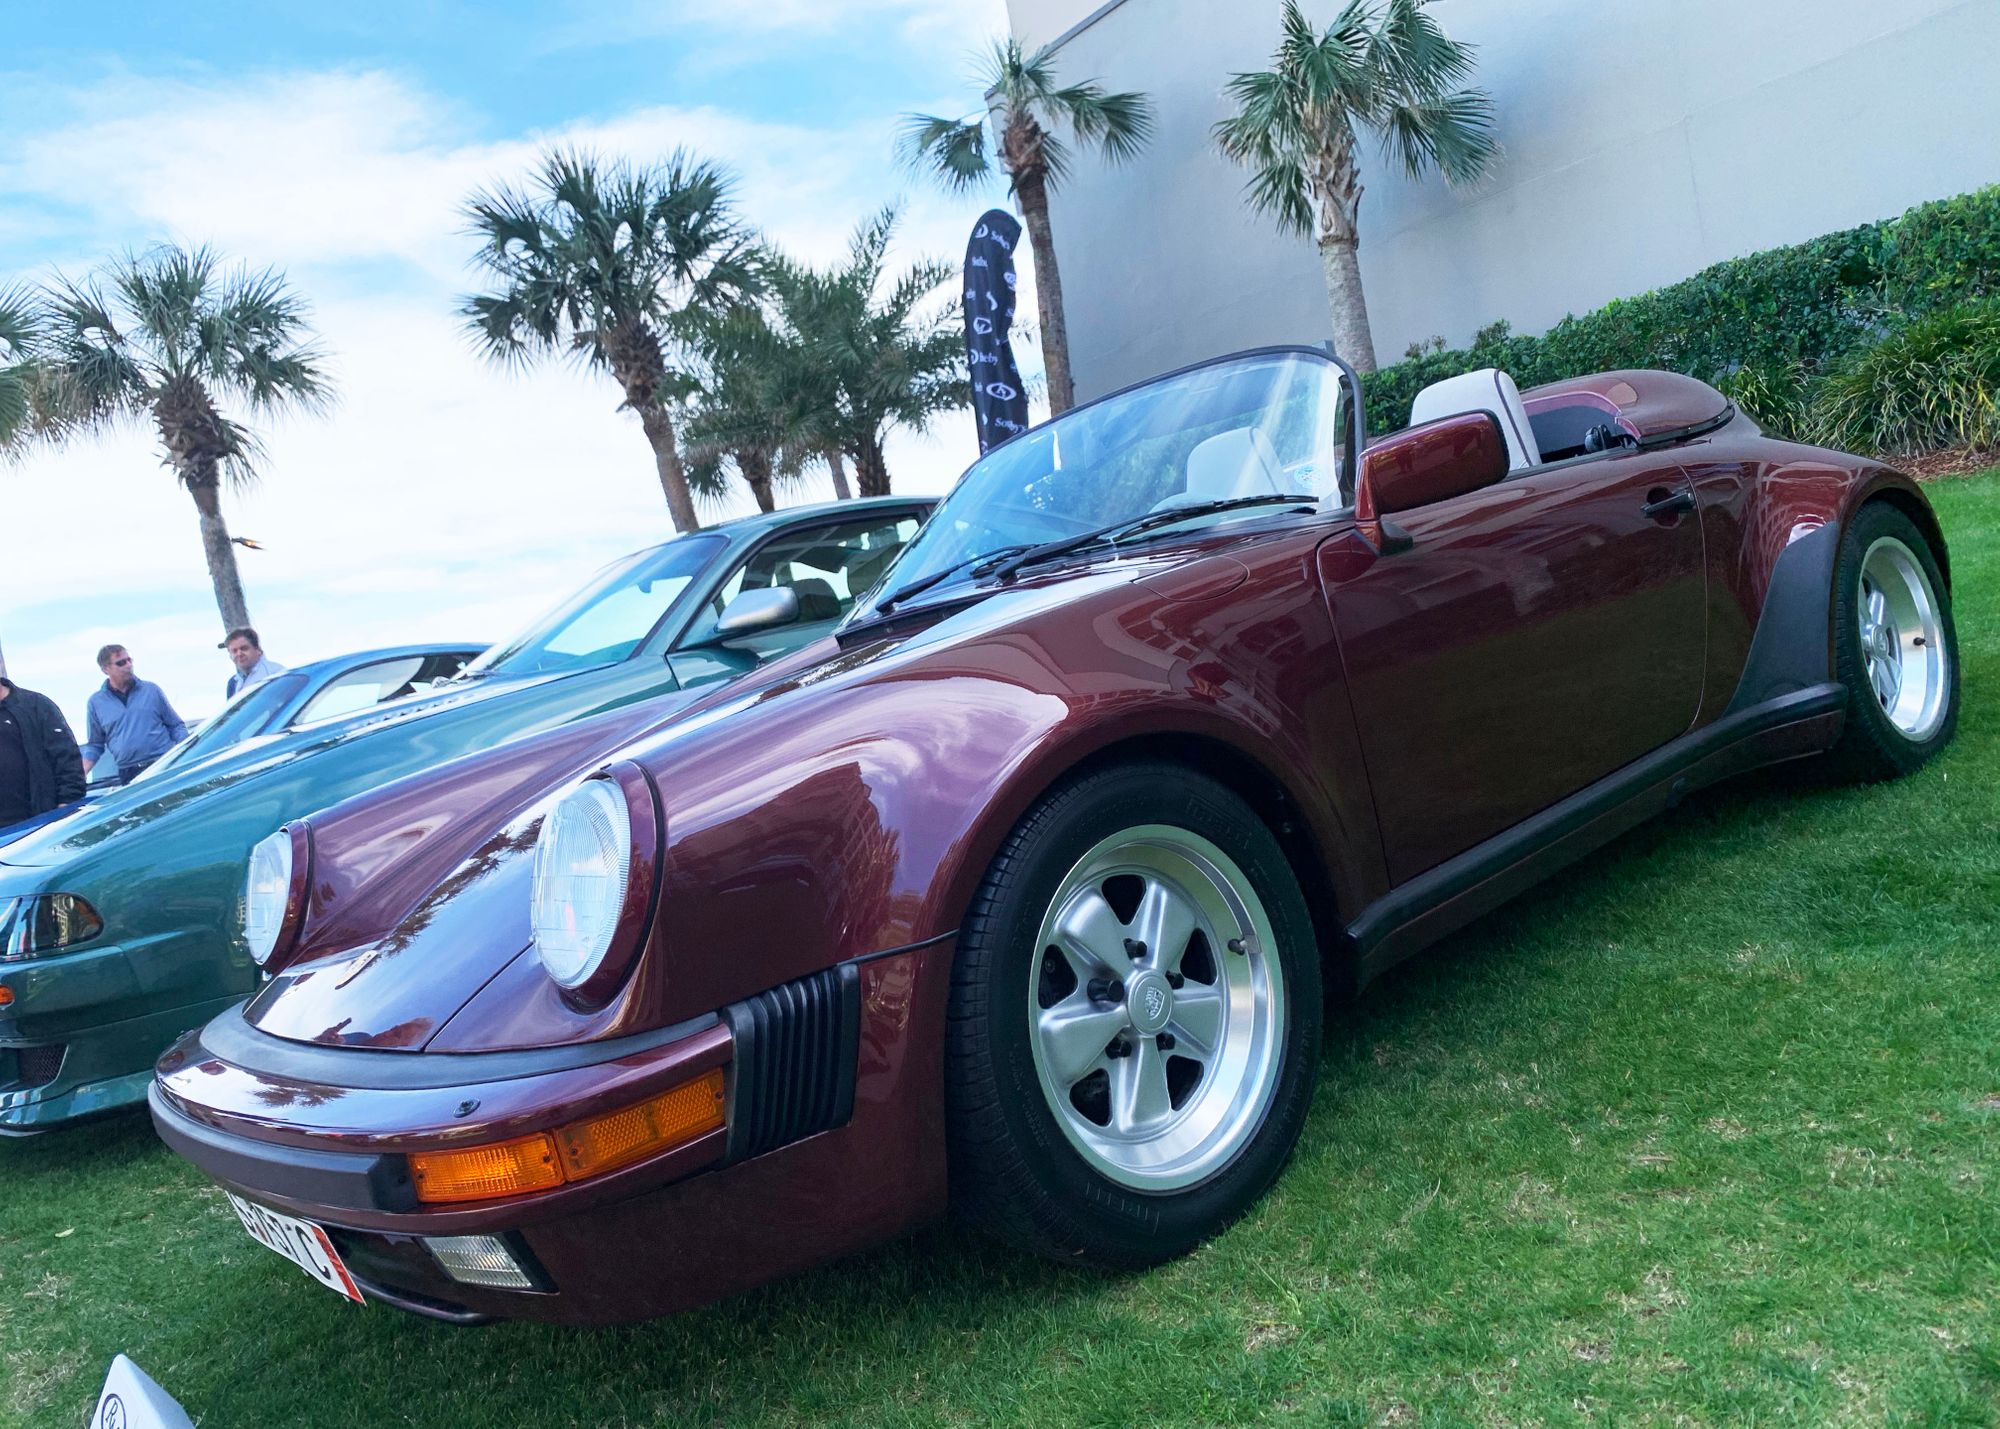 <img src="porsche.jpg" alt="A vintage Porsche waiting to go to auction RM Sotheby's Amelia Island"